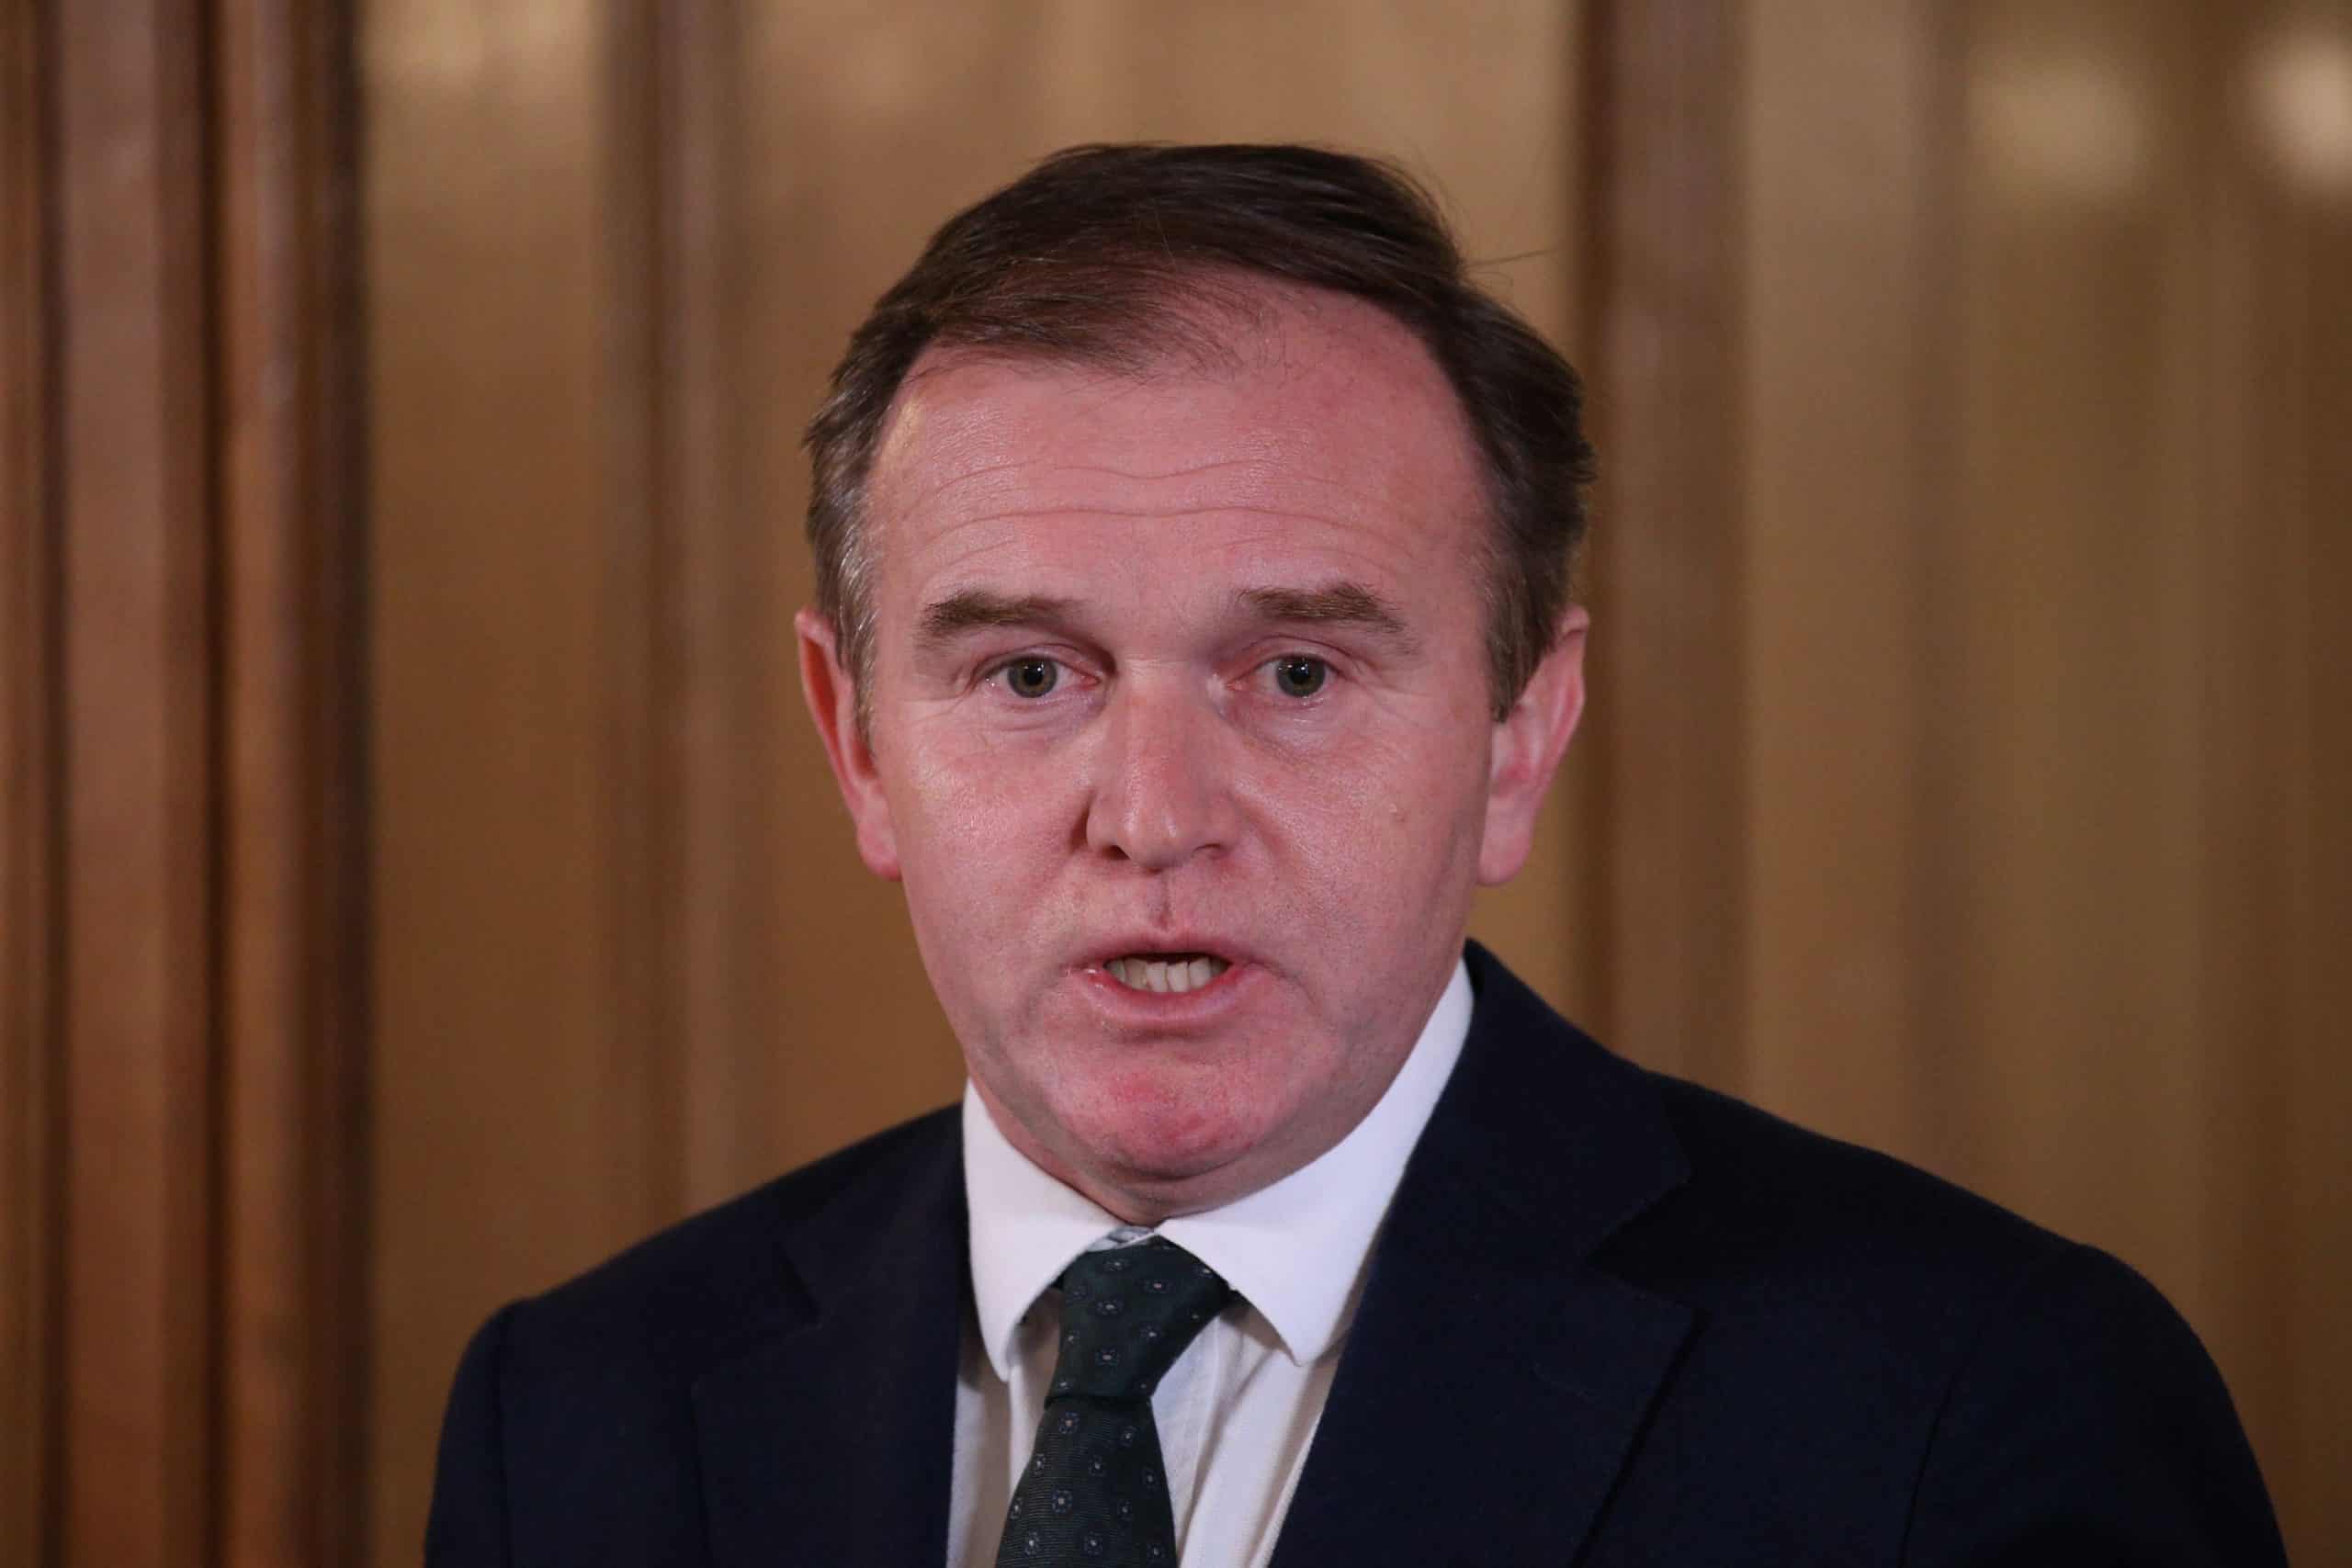 Minister says Starmer making ‘political point’ over Johnson’s Savile slur